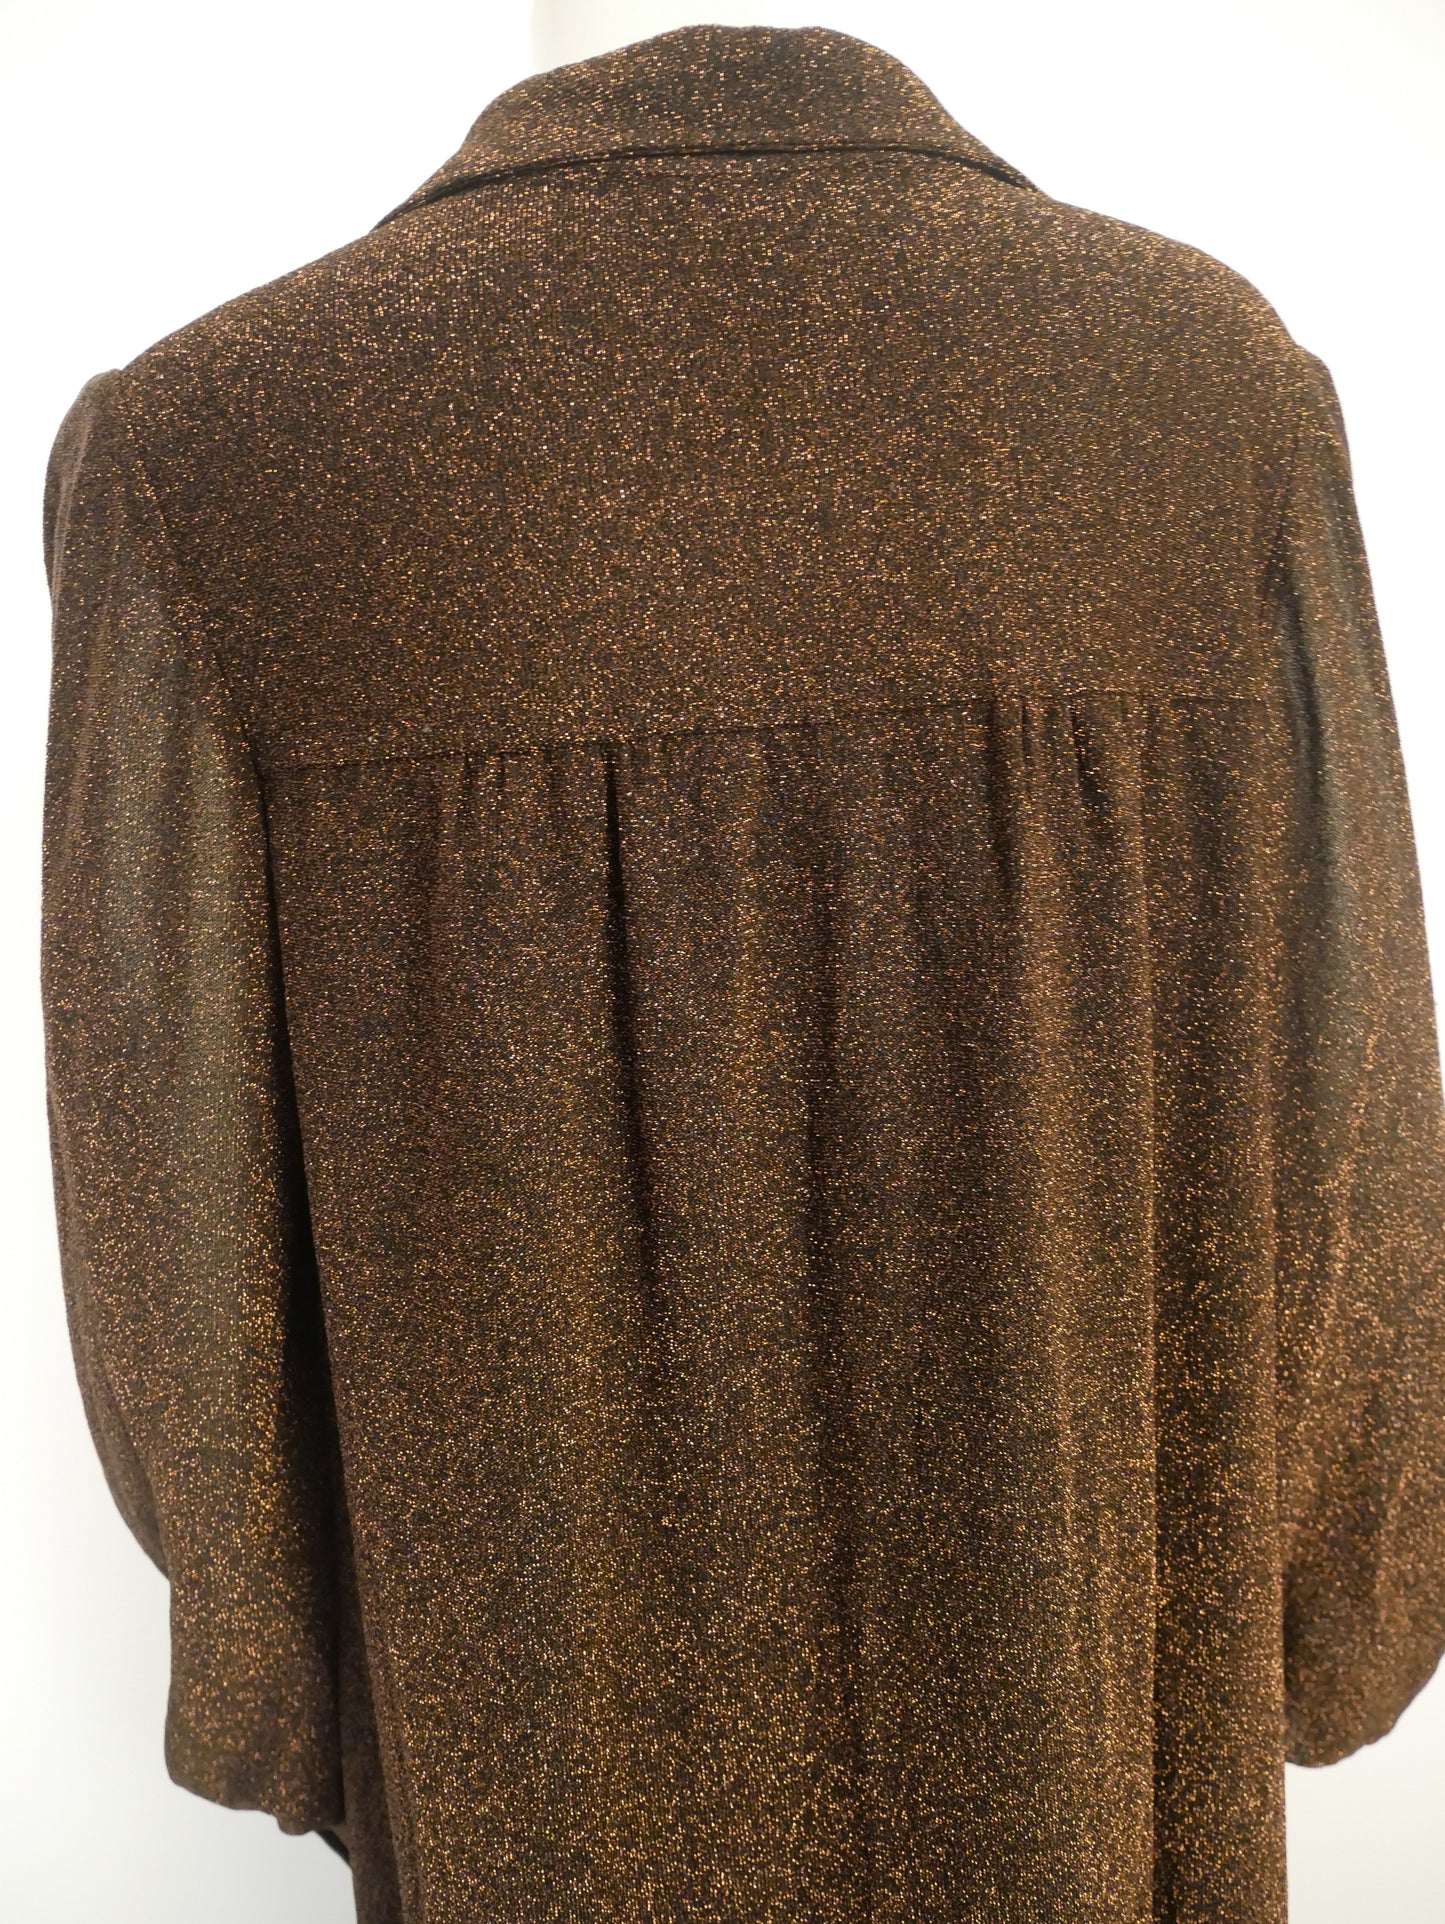 Guy Laroche copper lurex vintage dress - M - 1980s